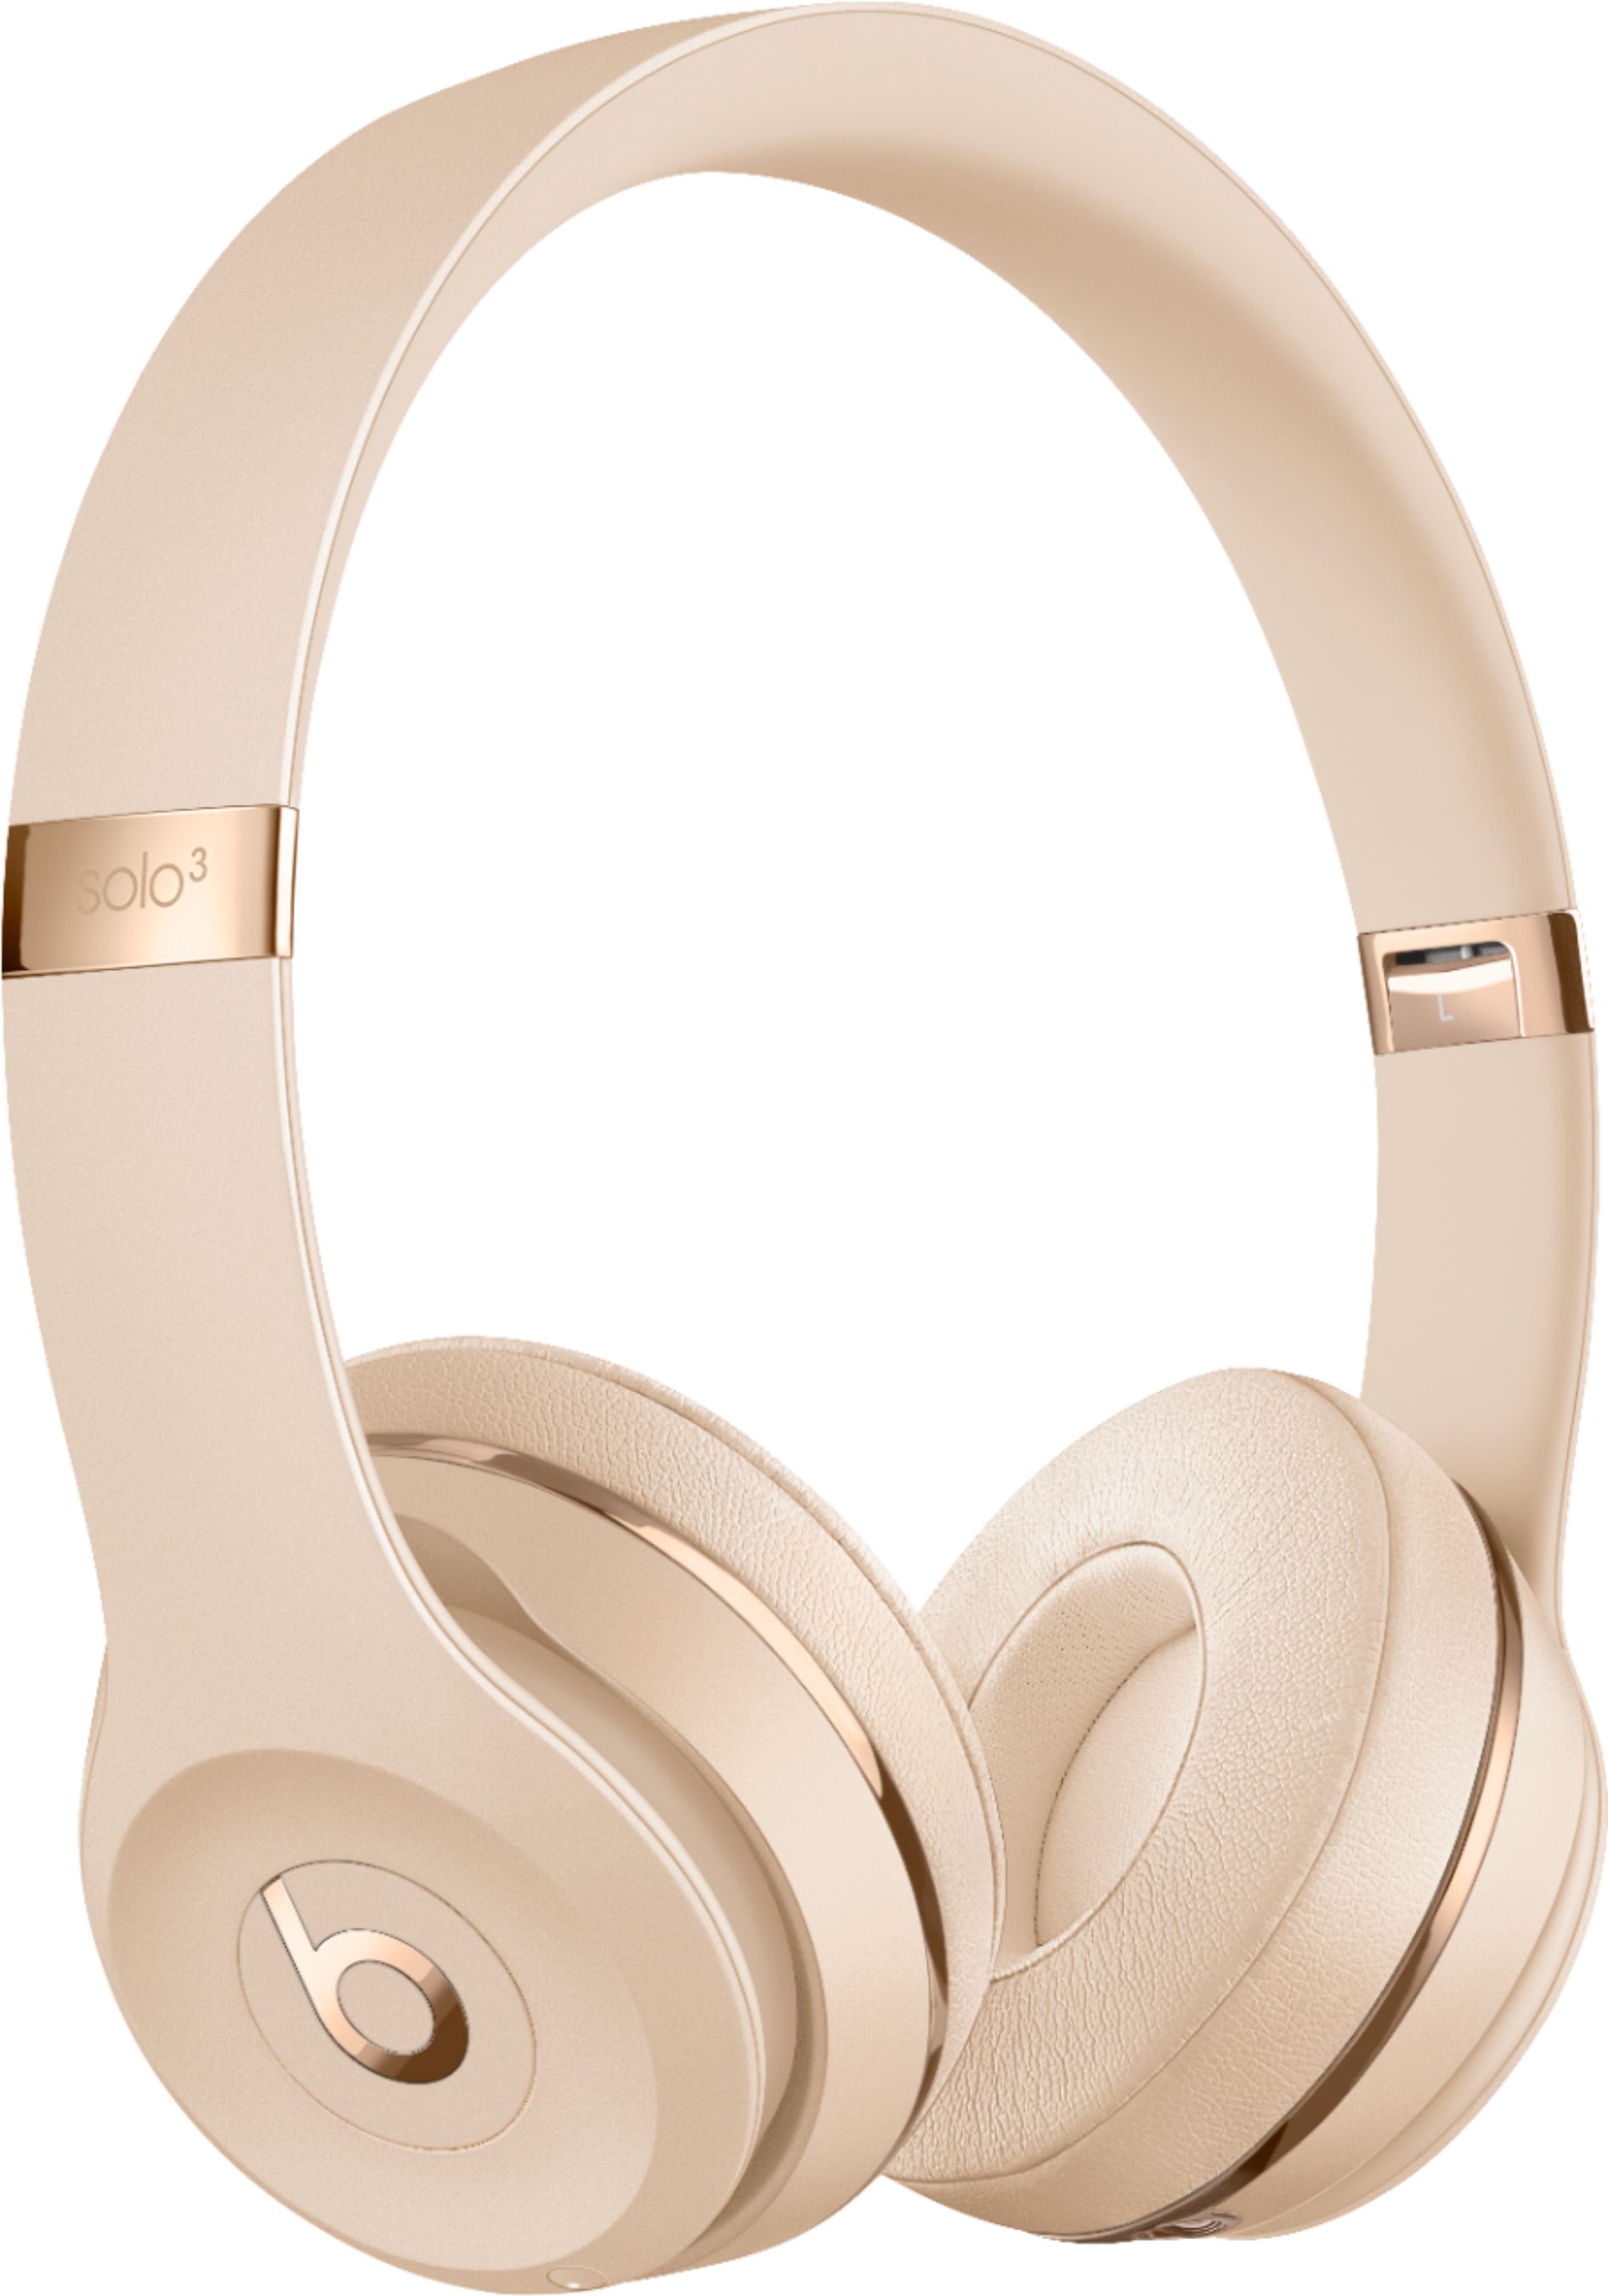 matte gold headphones